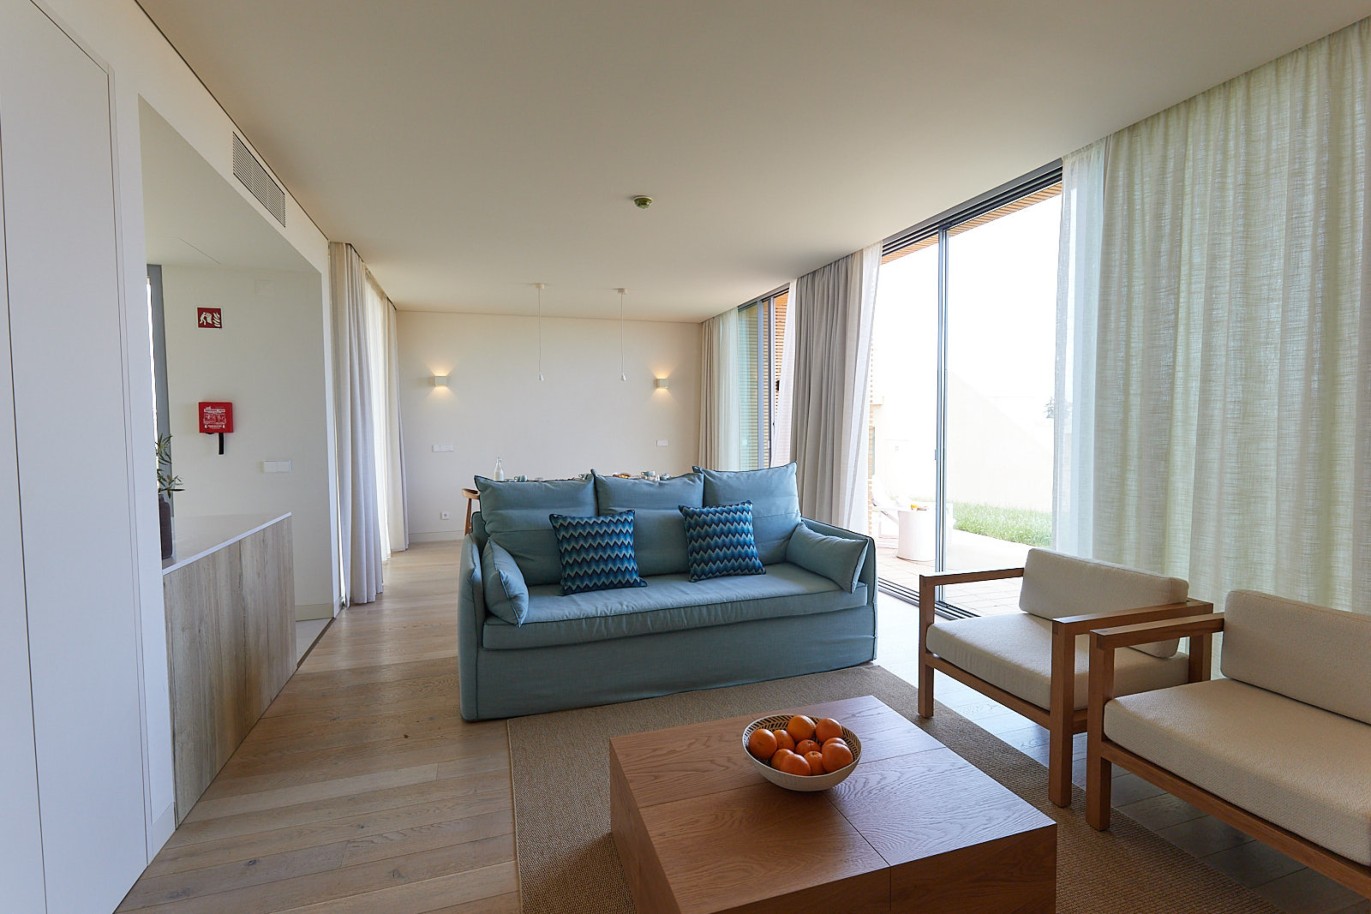 2 bedroom apartment in resort, for sale in Porches, Algarve_229178